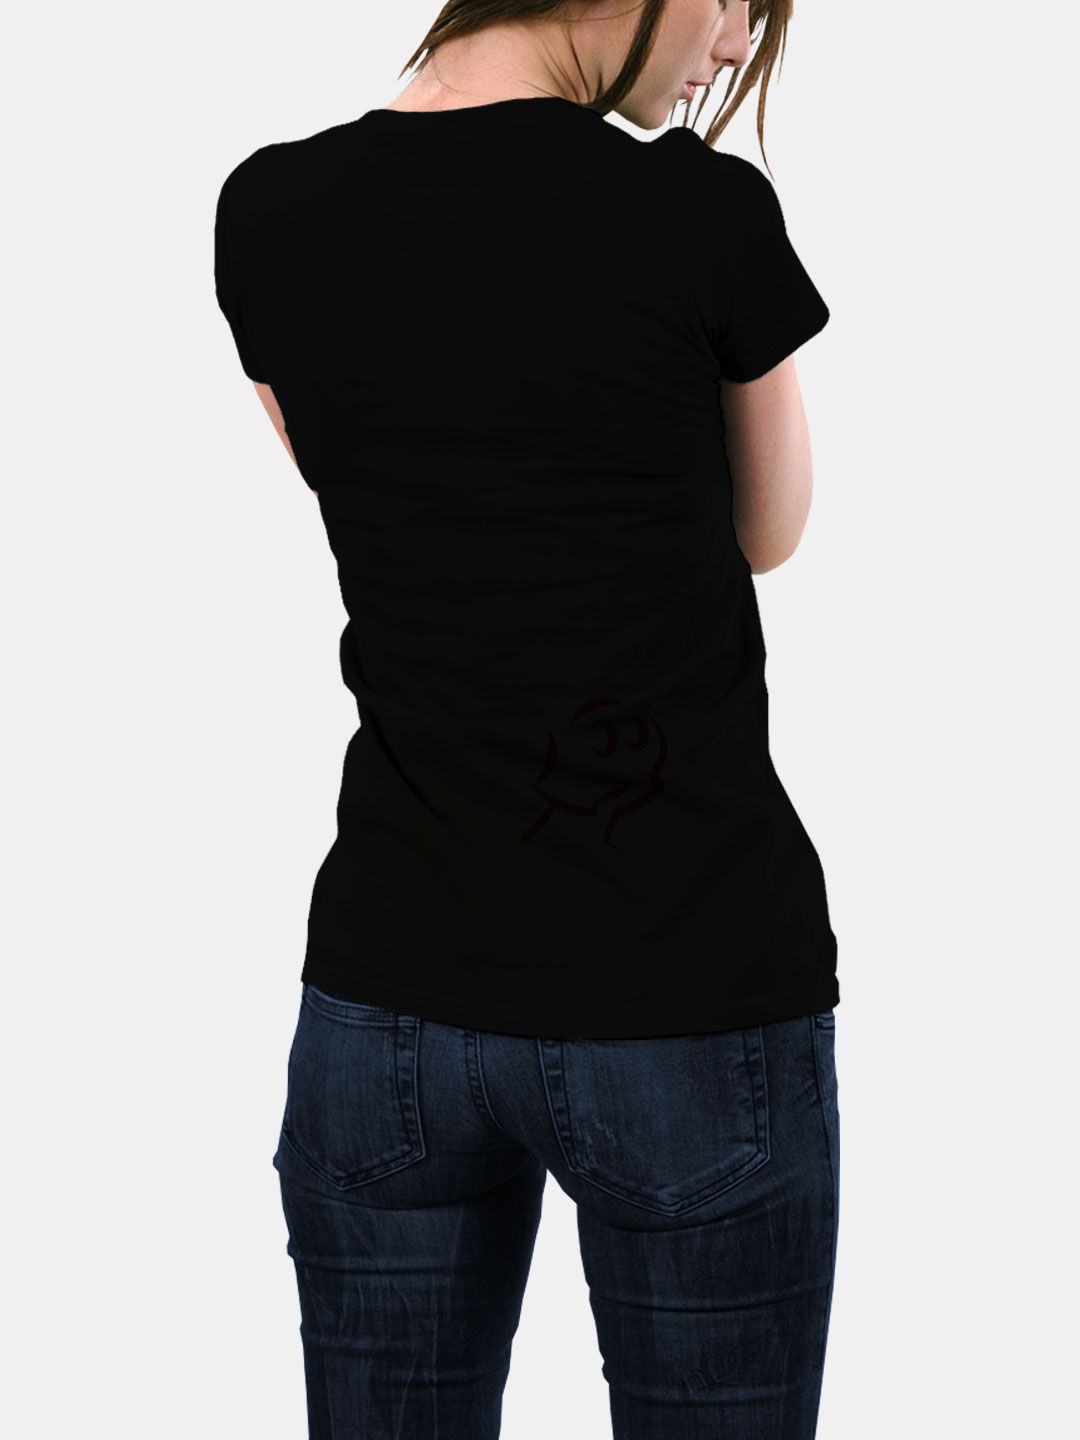 Mickey Silhouette Stroke - Designer T-Shirts